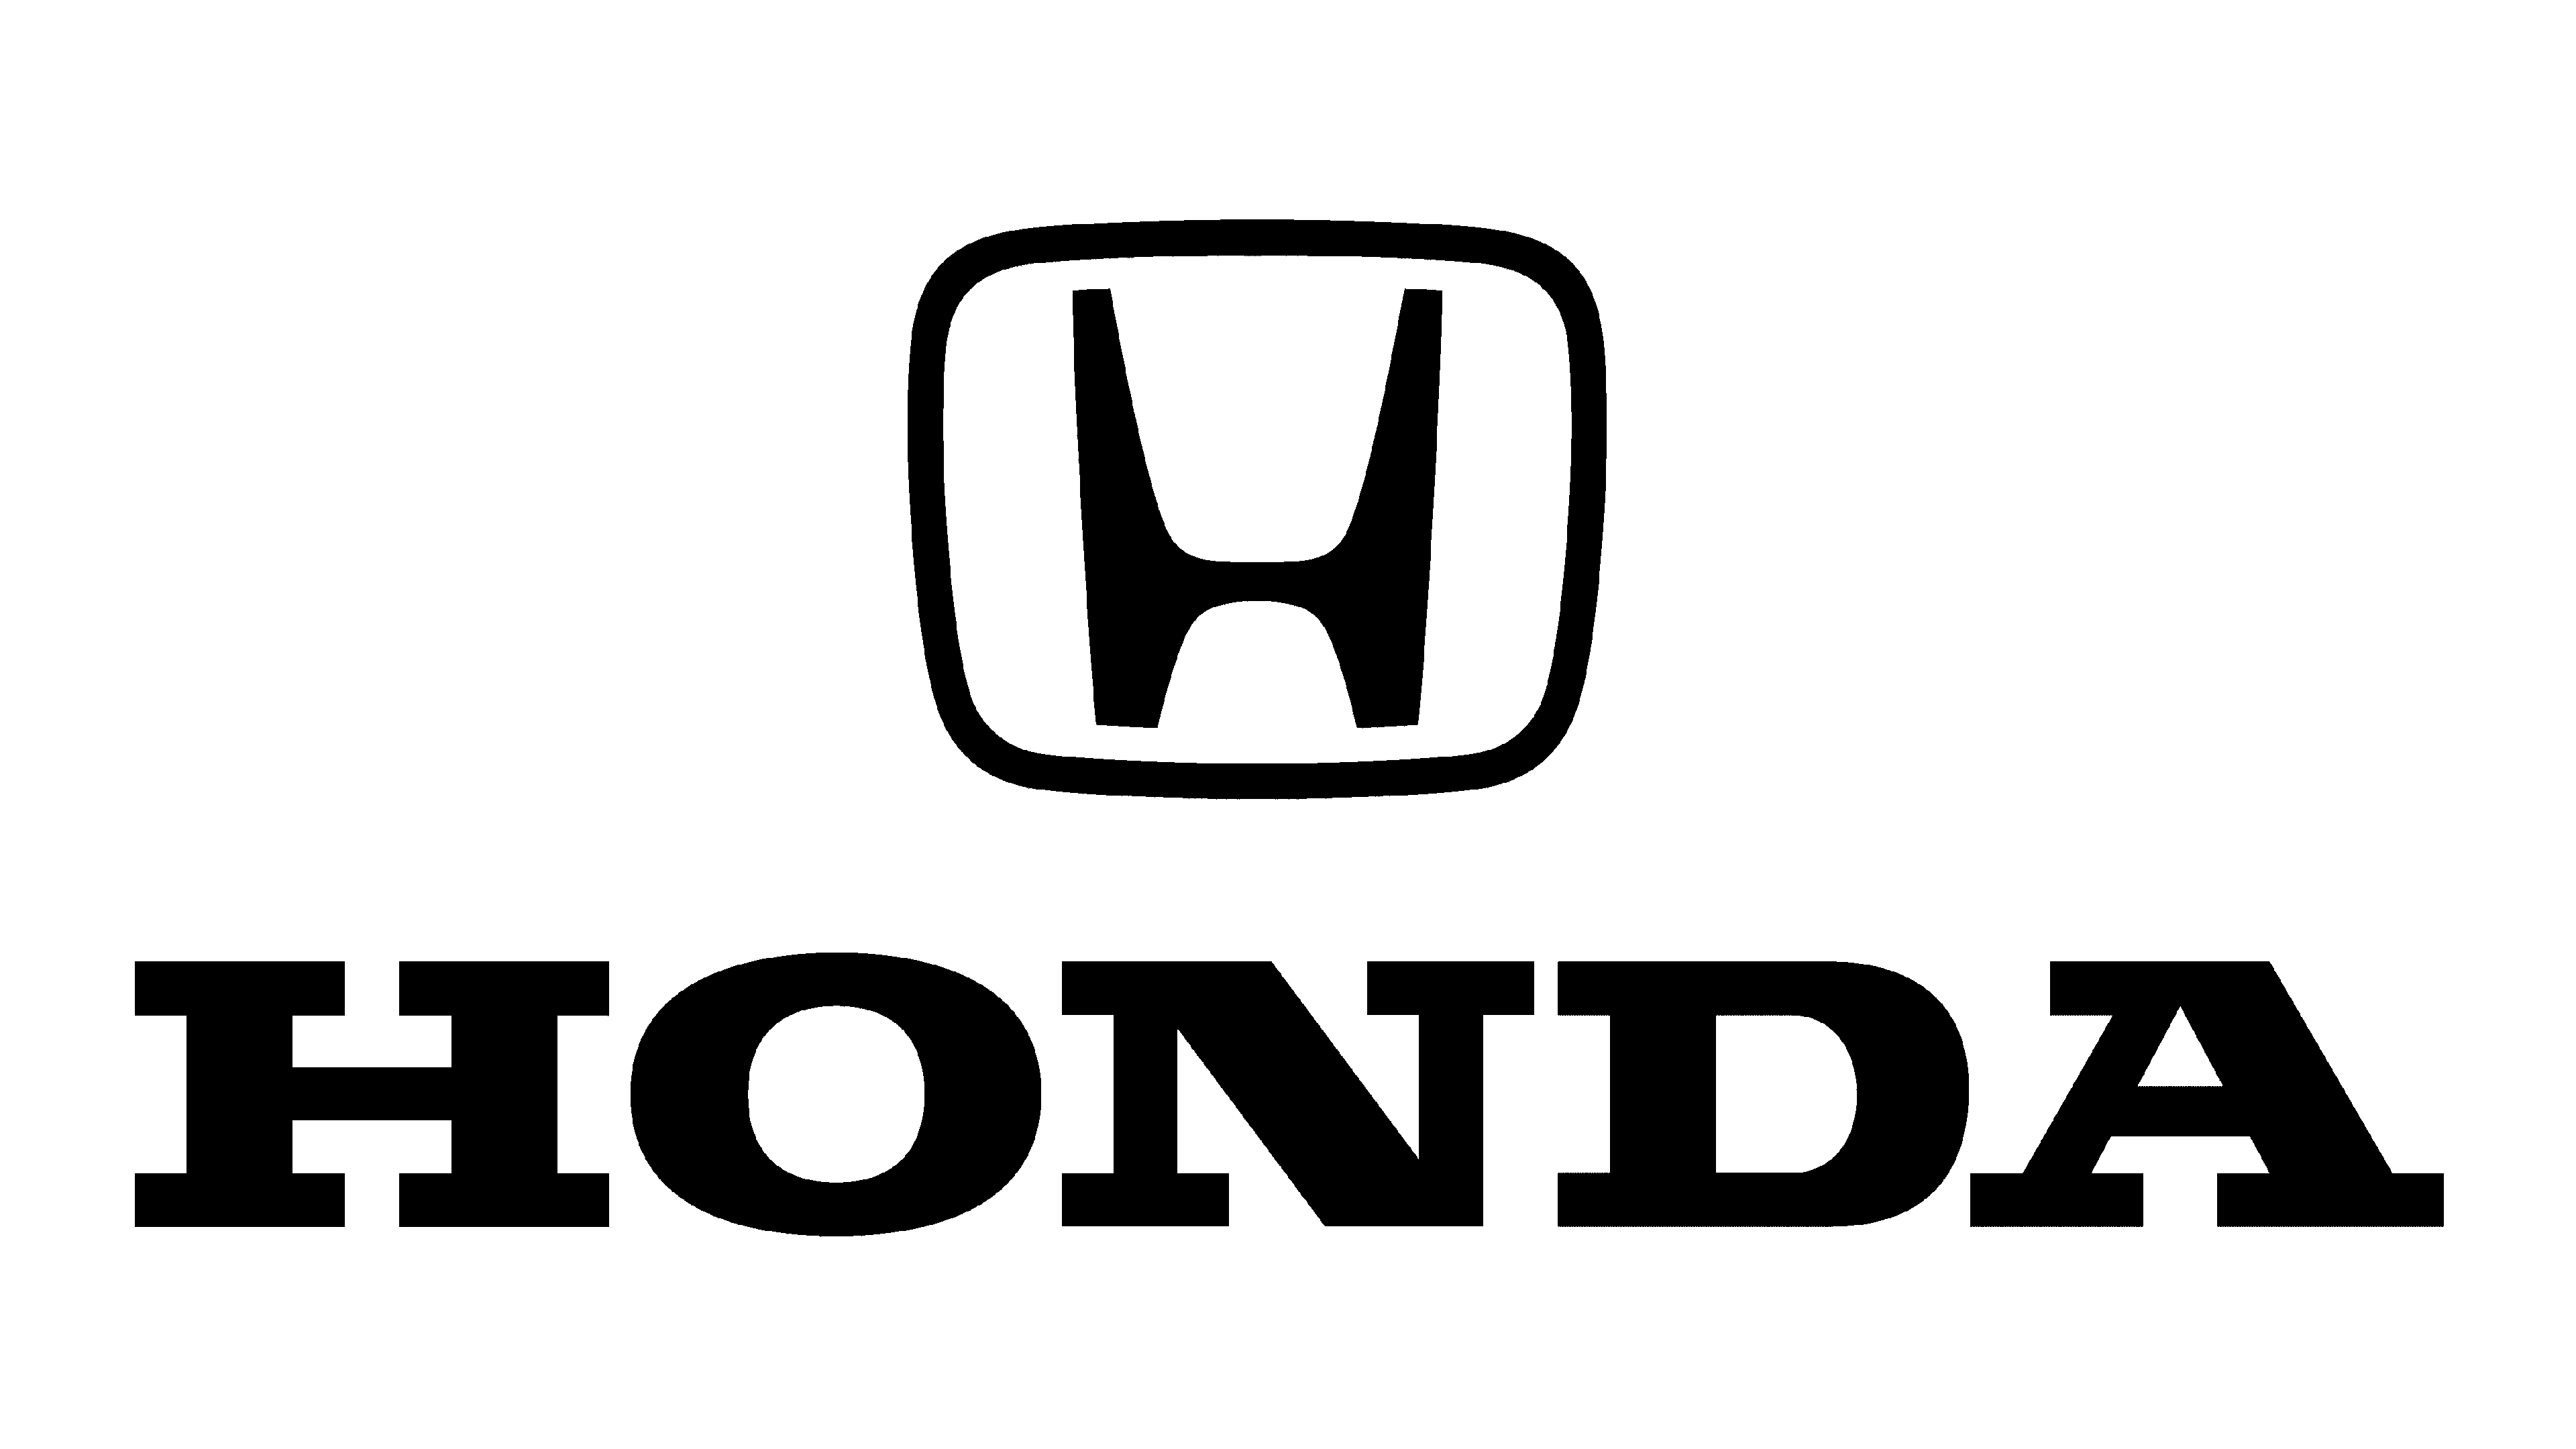 Что значит honda. Honda logo. Honda Лодочный мотор логотип. Honda logo 2001. Honda надпись.